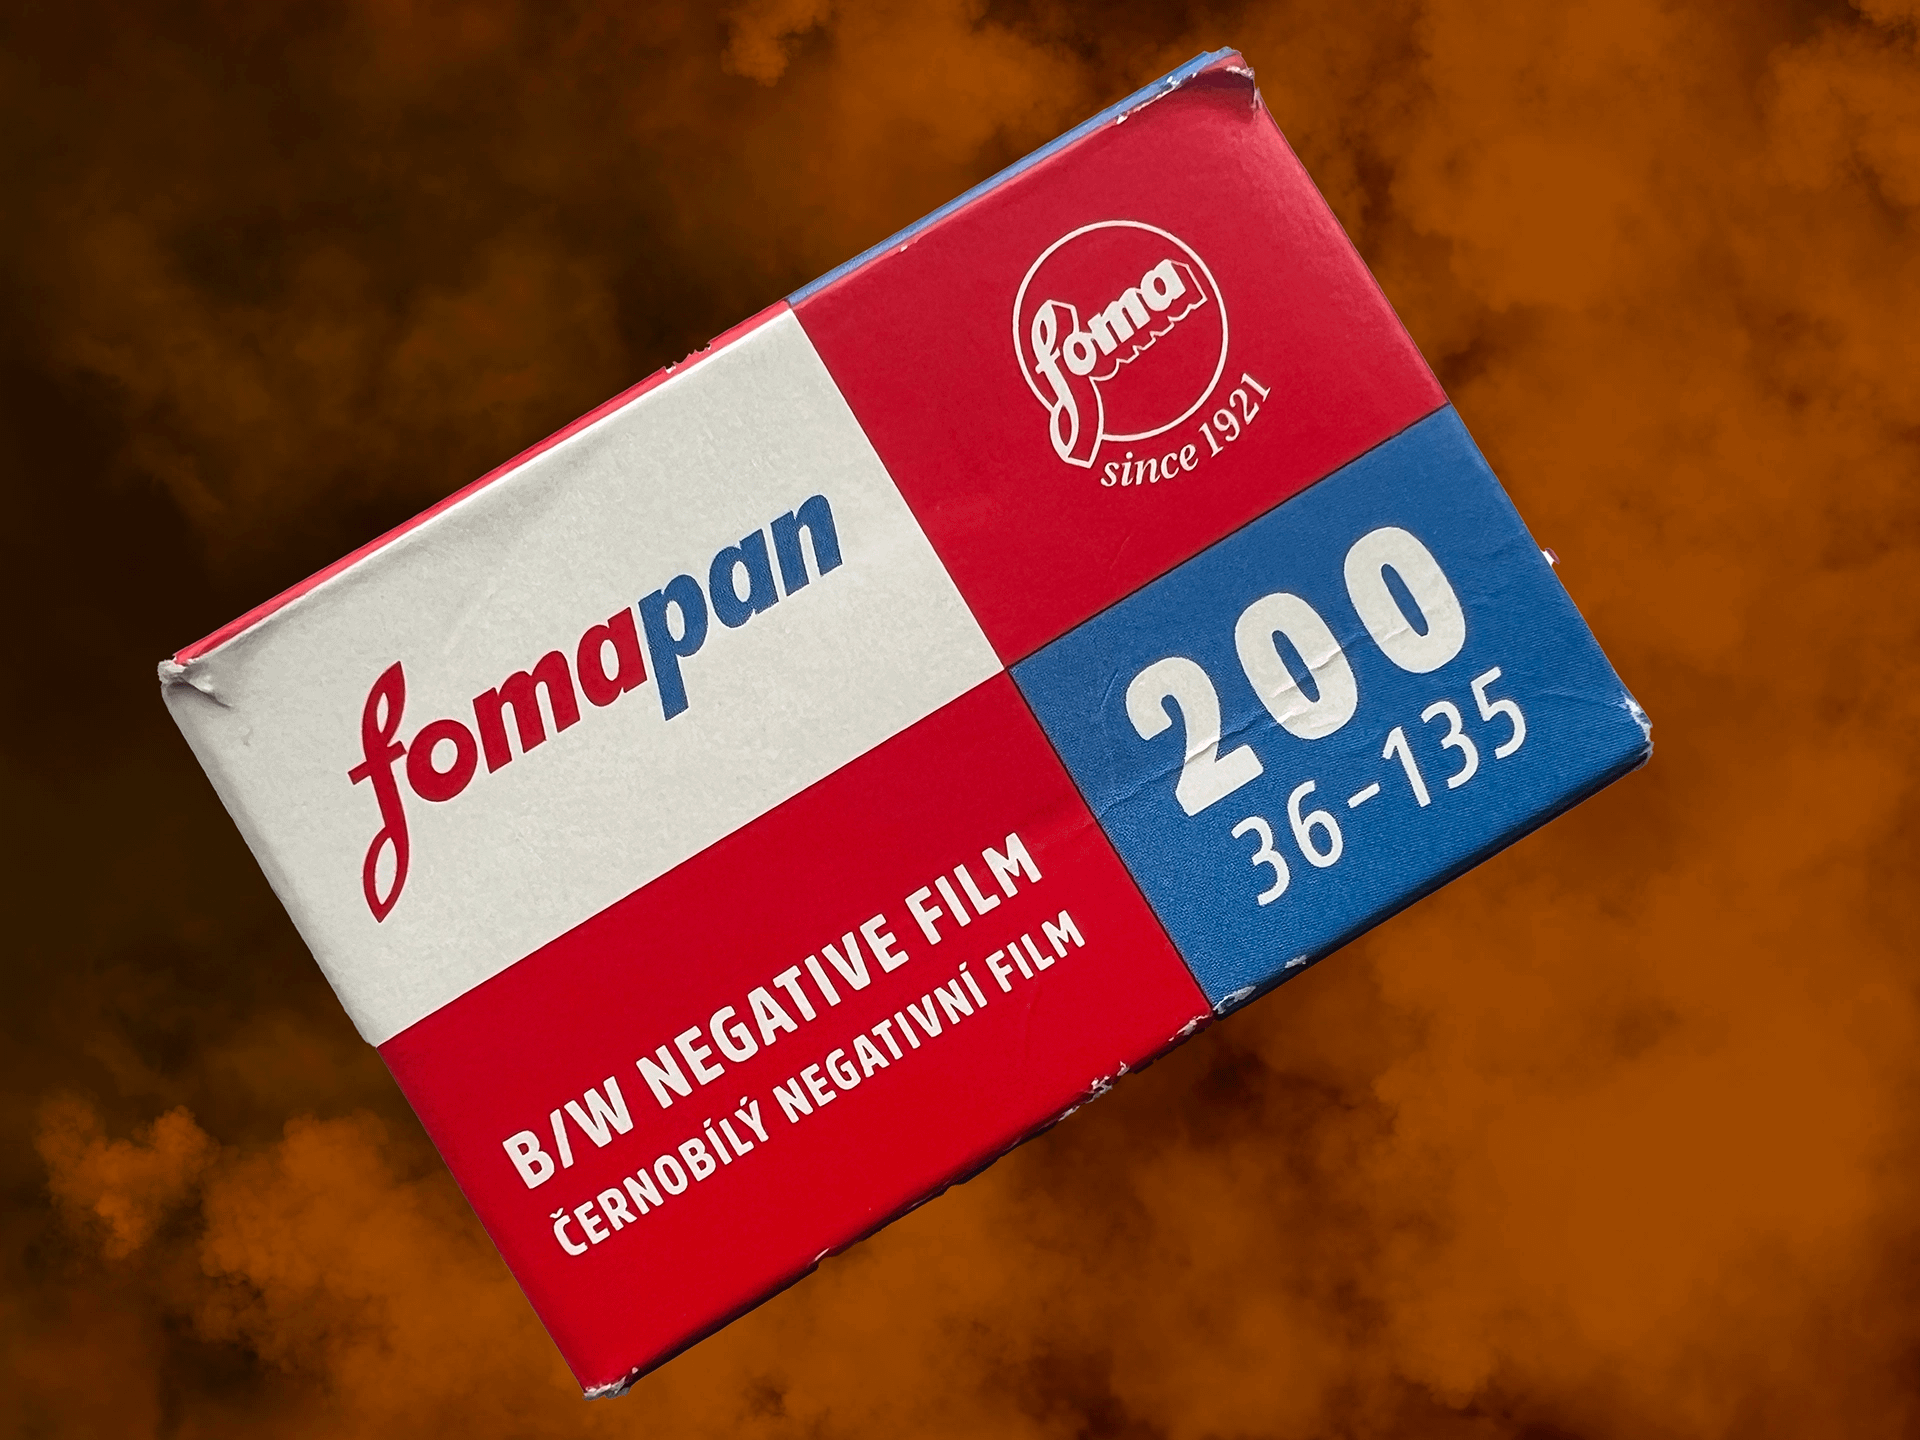 Fomapan 200 Film Review: A Photographer’s Dream